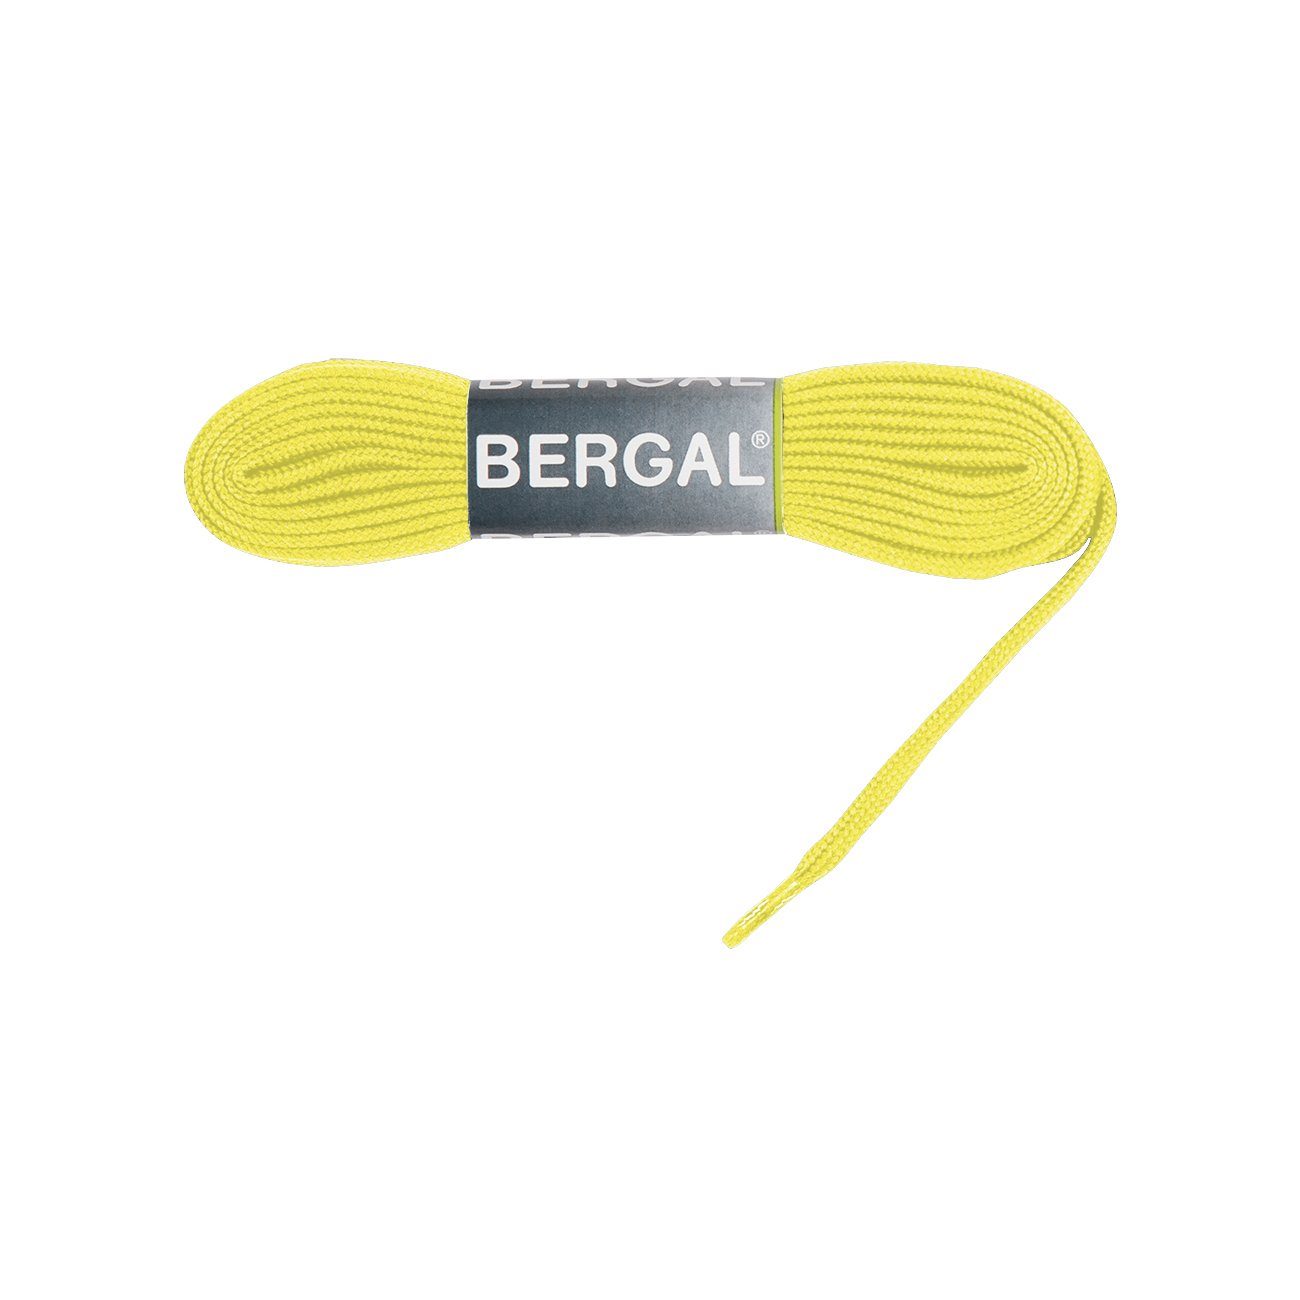 Bergal Schnürsenkel Sneaker Laces - 10 Flach Neongelb Breit mm 